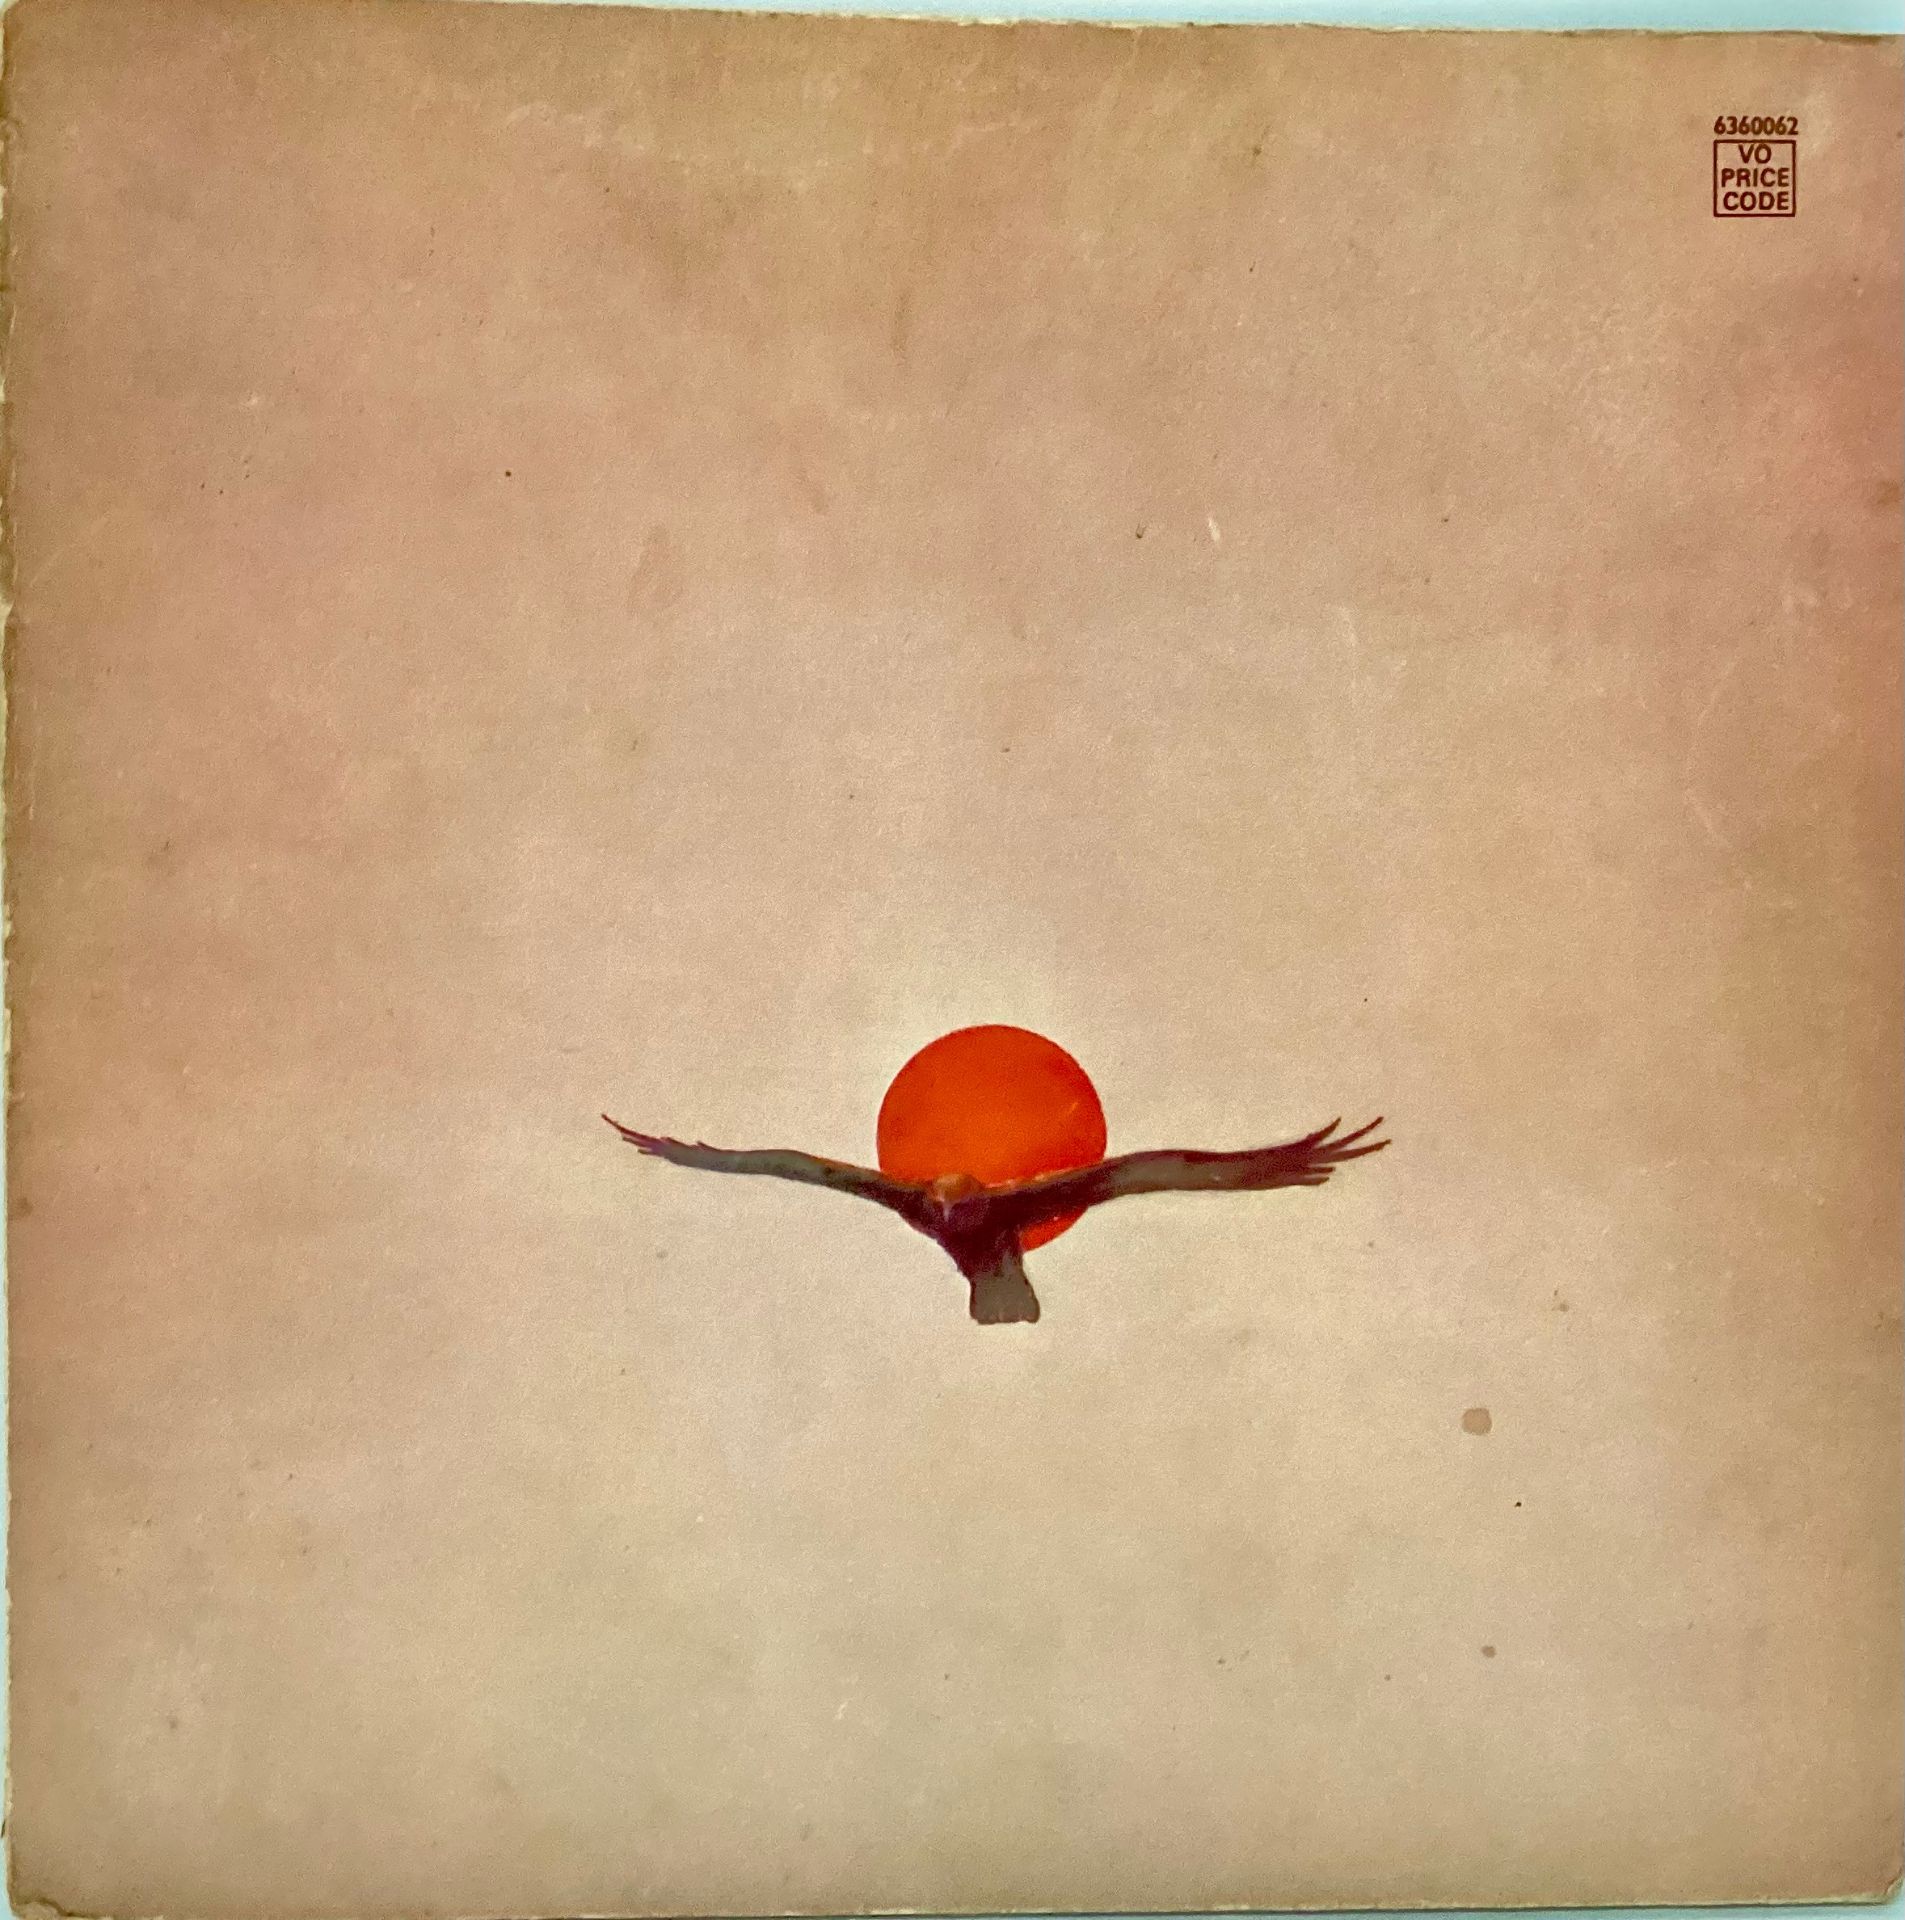 JADE WARRIOR VINYL VERTIGO SWIRL ALBUM ‘RELEASED’. This Ex condition album is from 1971 and on the - Image 4 of 9